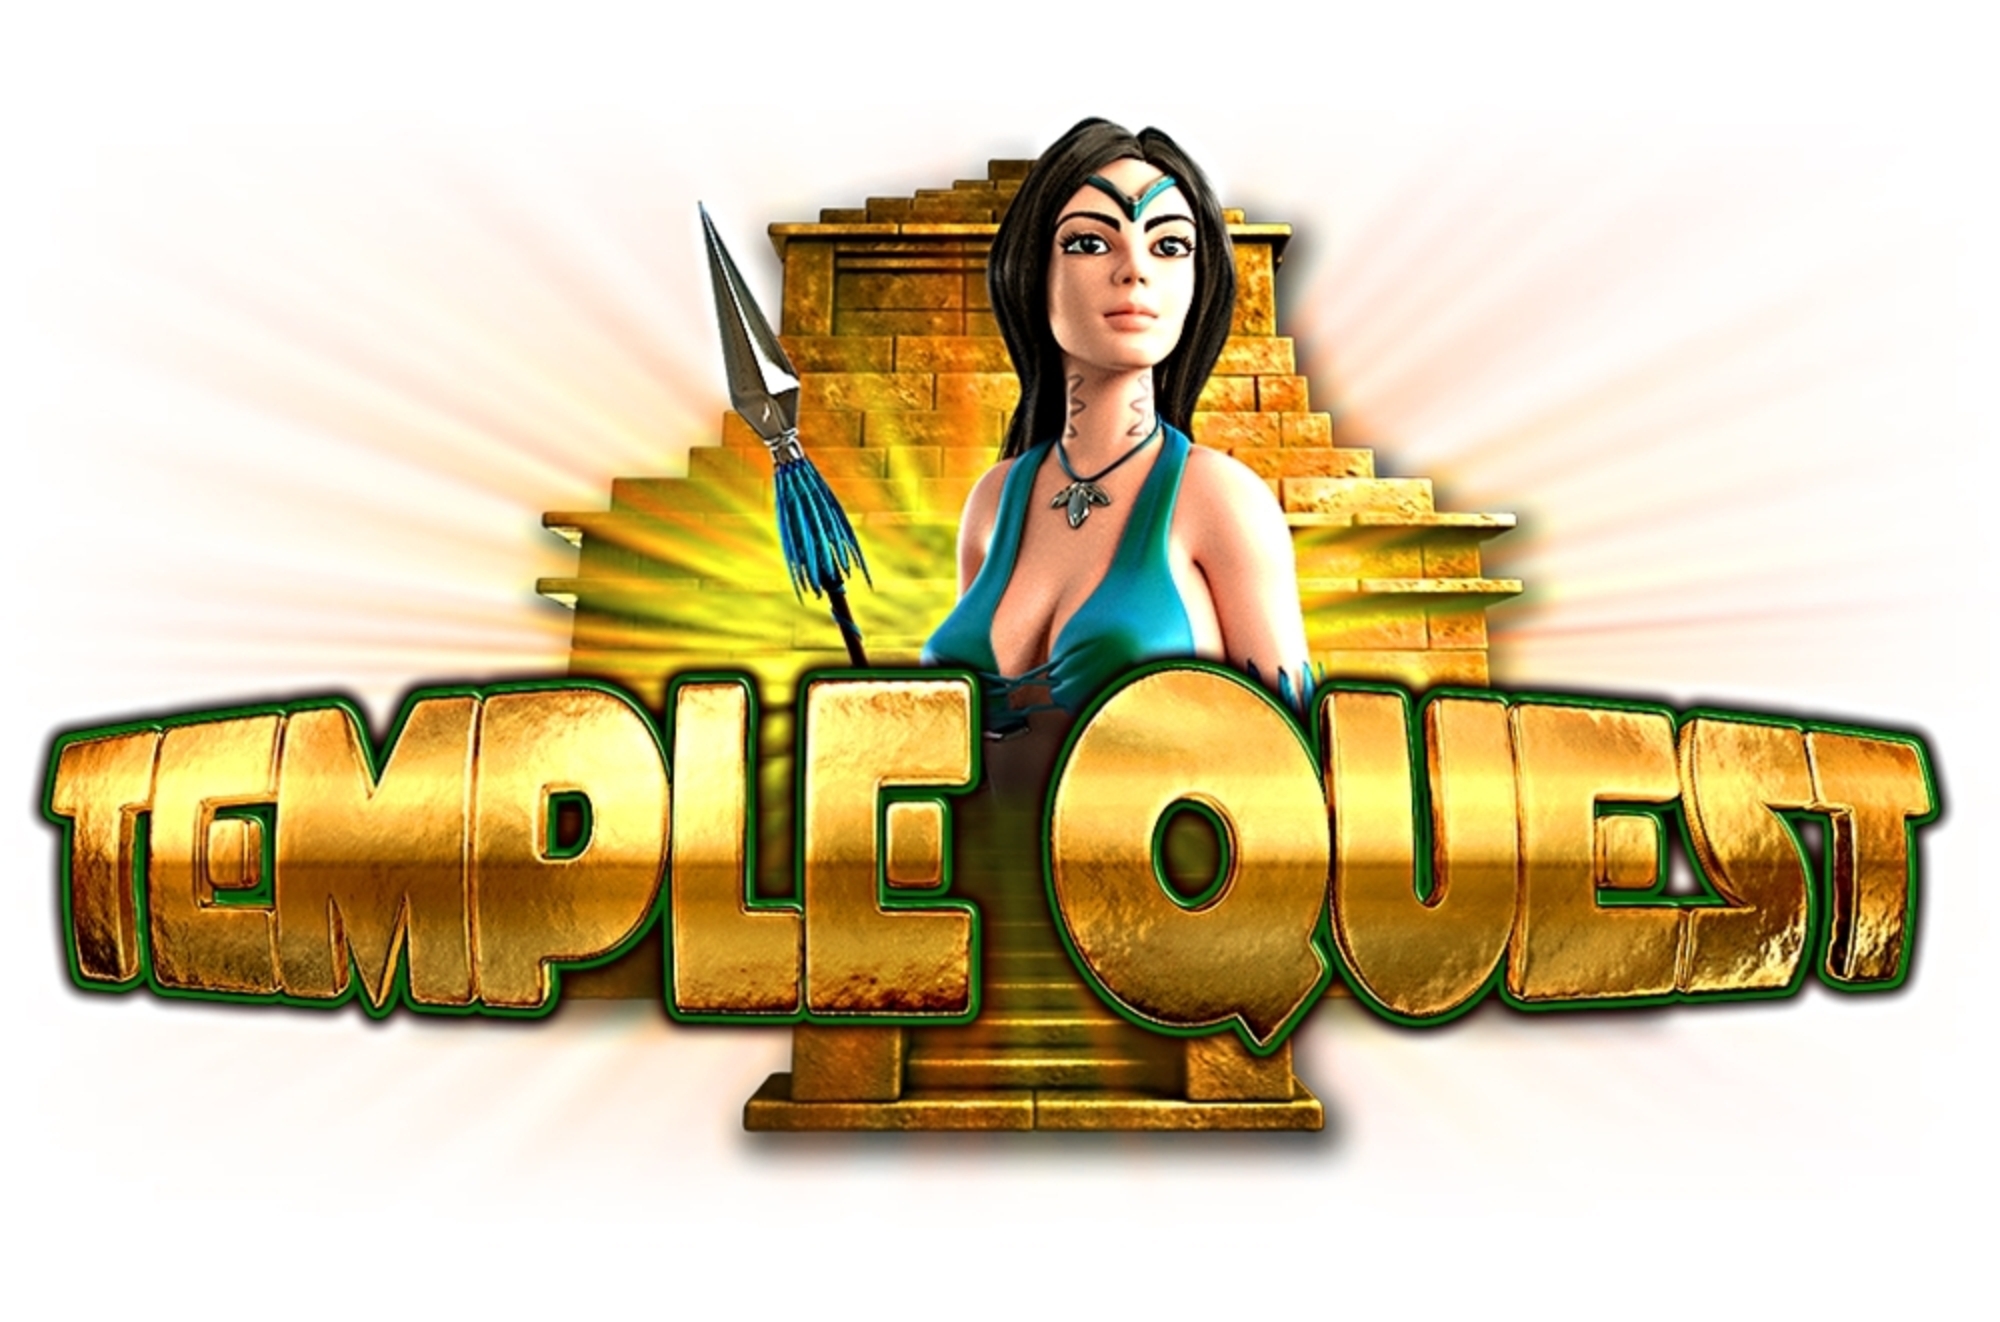 Temple Quest demo